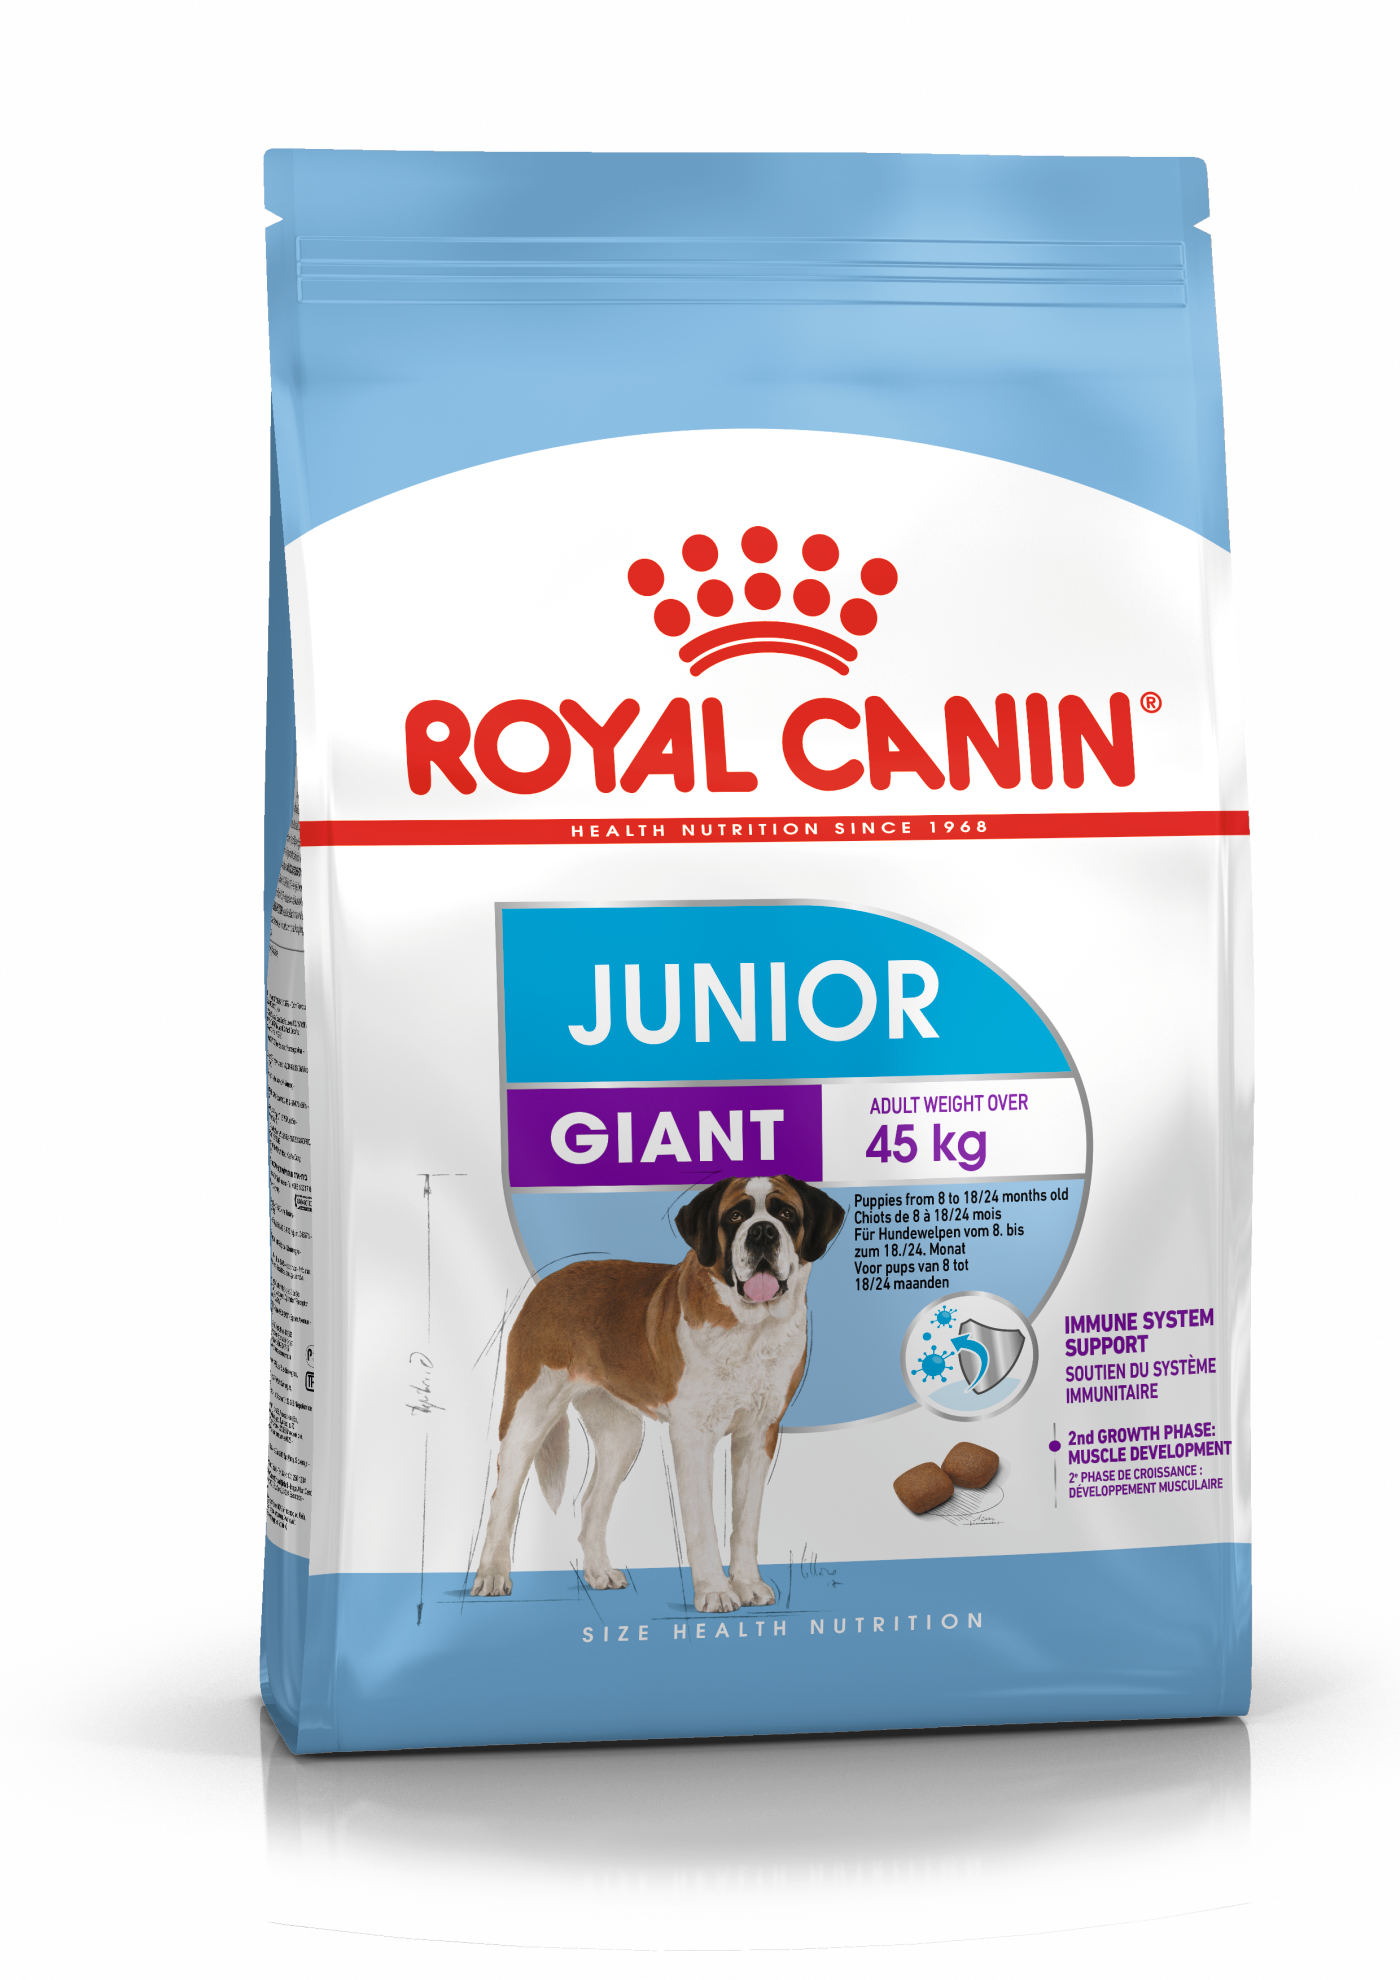 Giant Junior Royal Canin